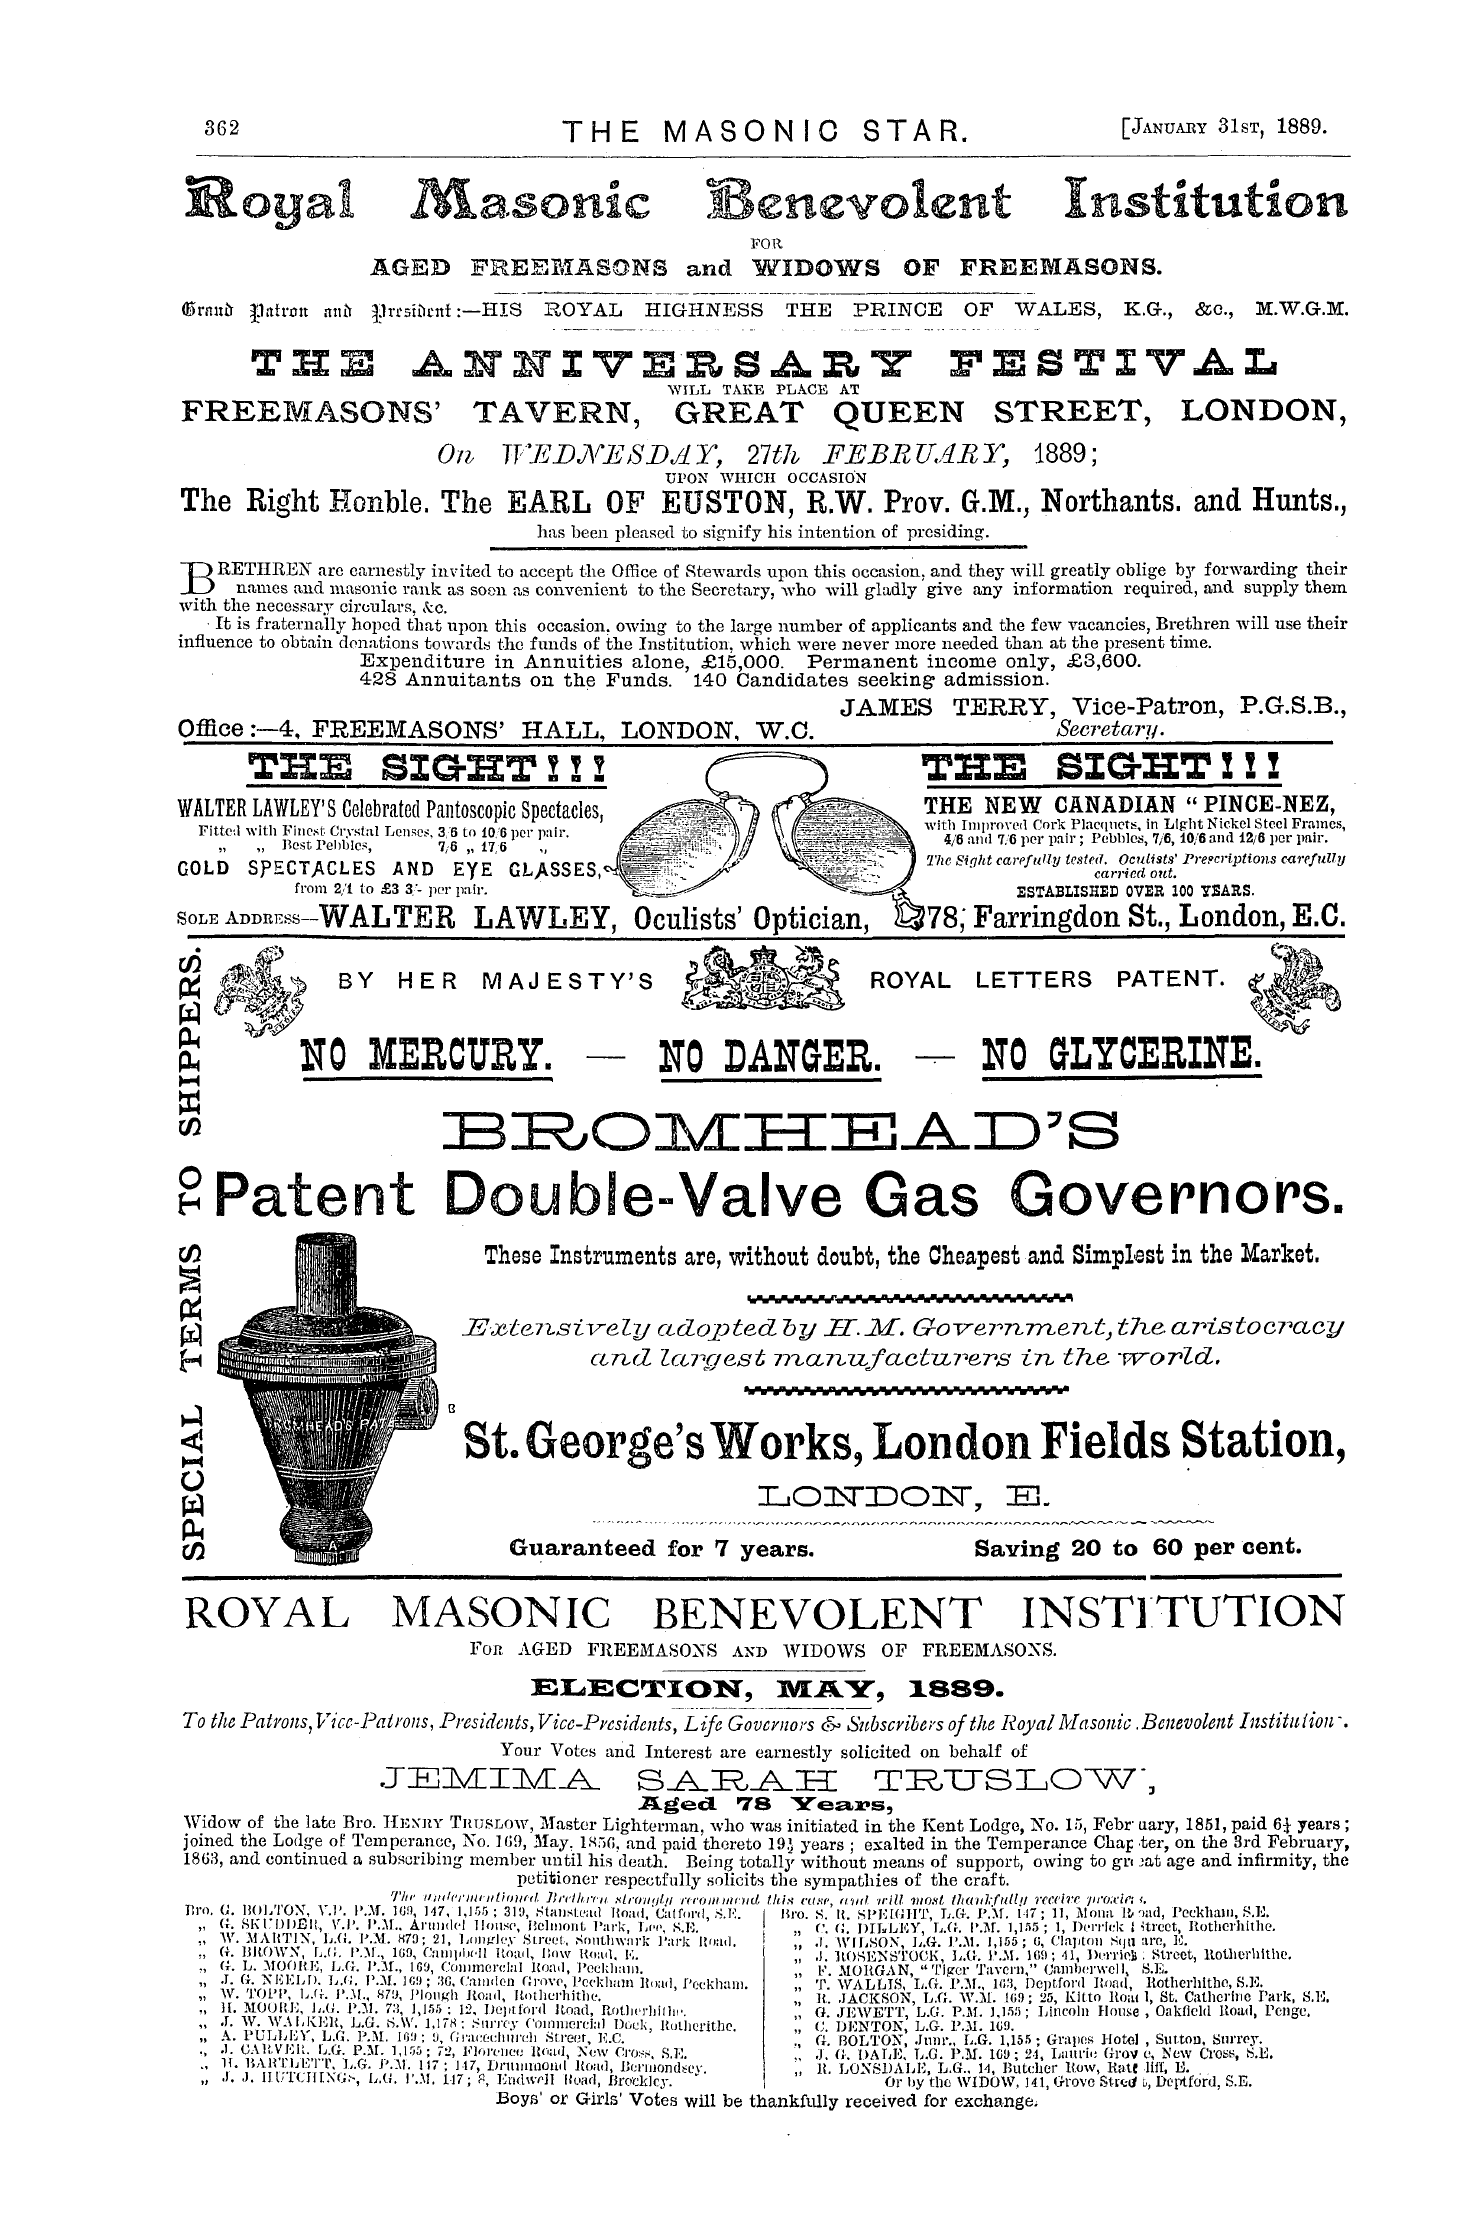 The Masonic Star: 1889-01-31: 12